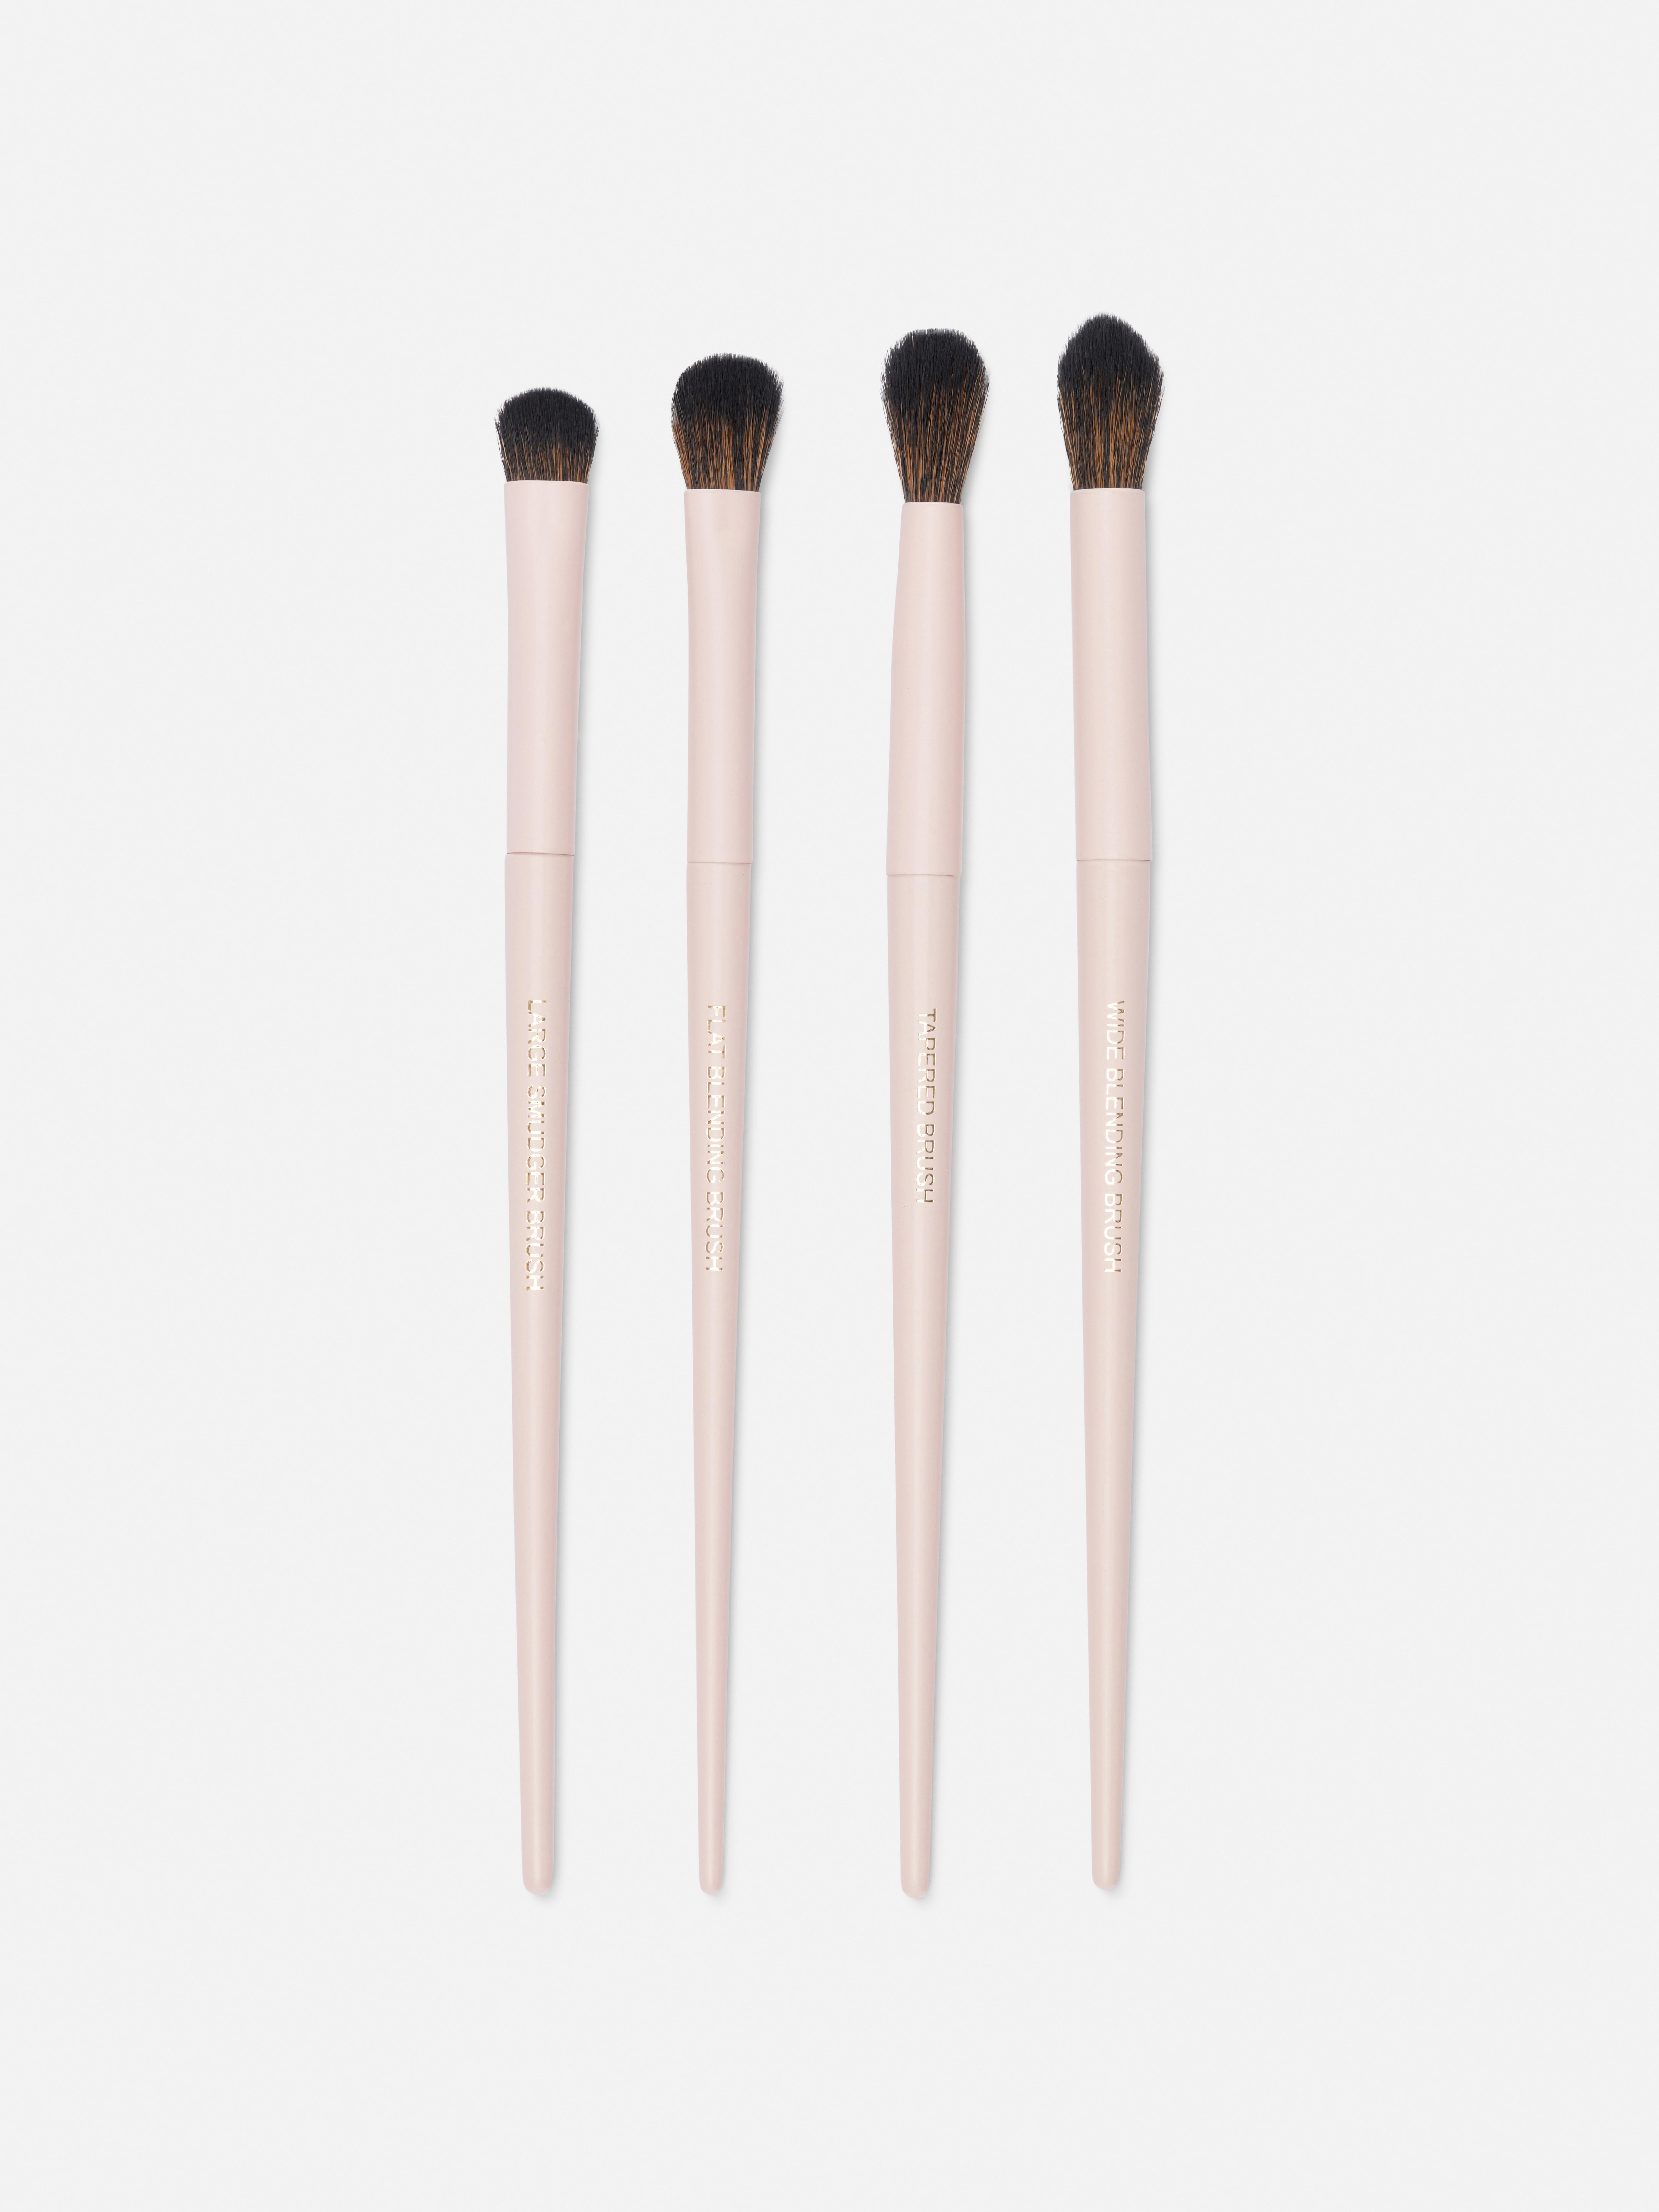 PS Pro Blending Makeup Brush Set